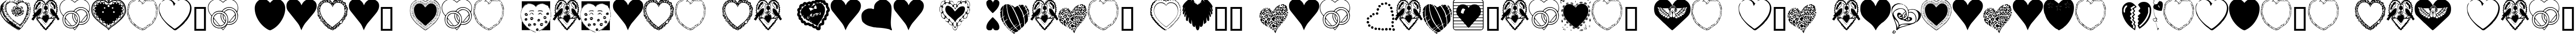 Пример написания шрифтом Hearts Galore текста на испанском